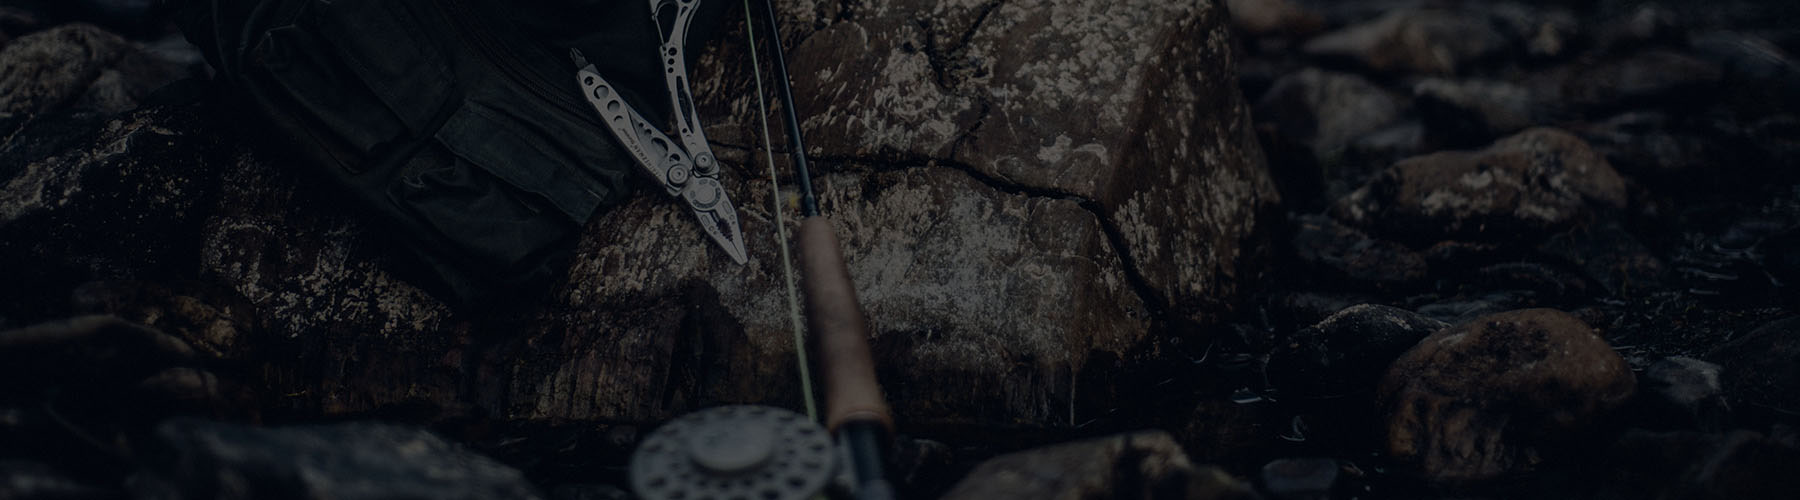 Bag, Leatherman Skeletool, Fishing Rod against rock